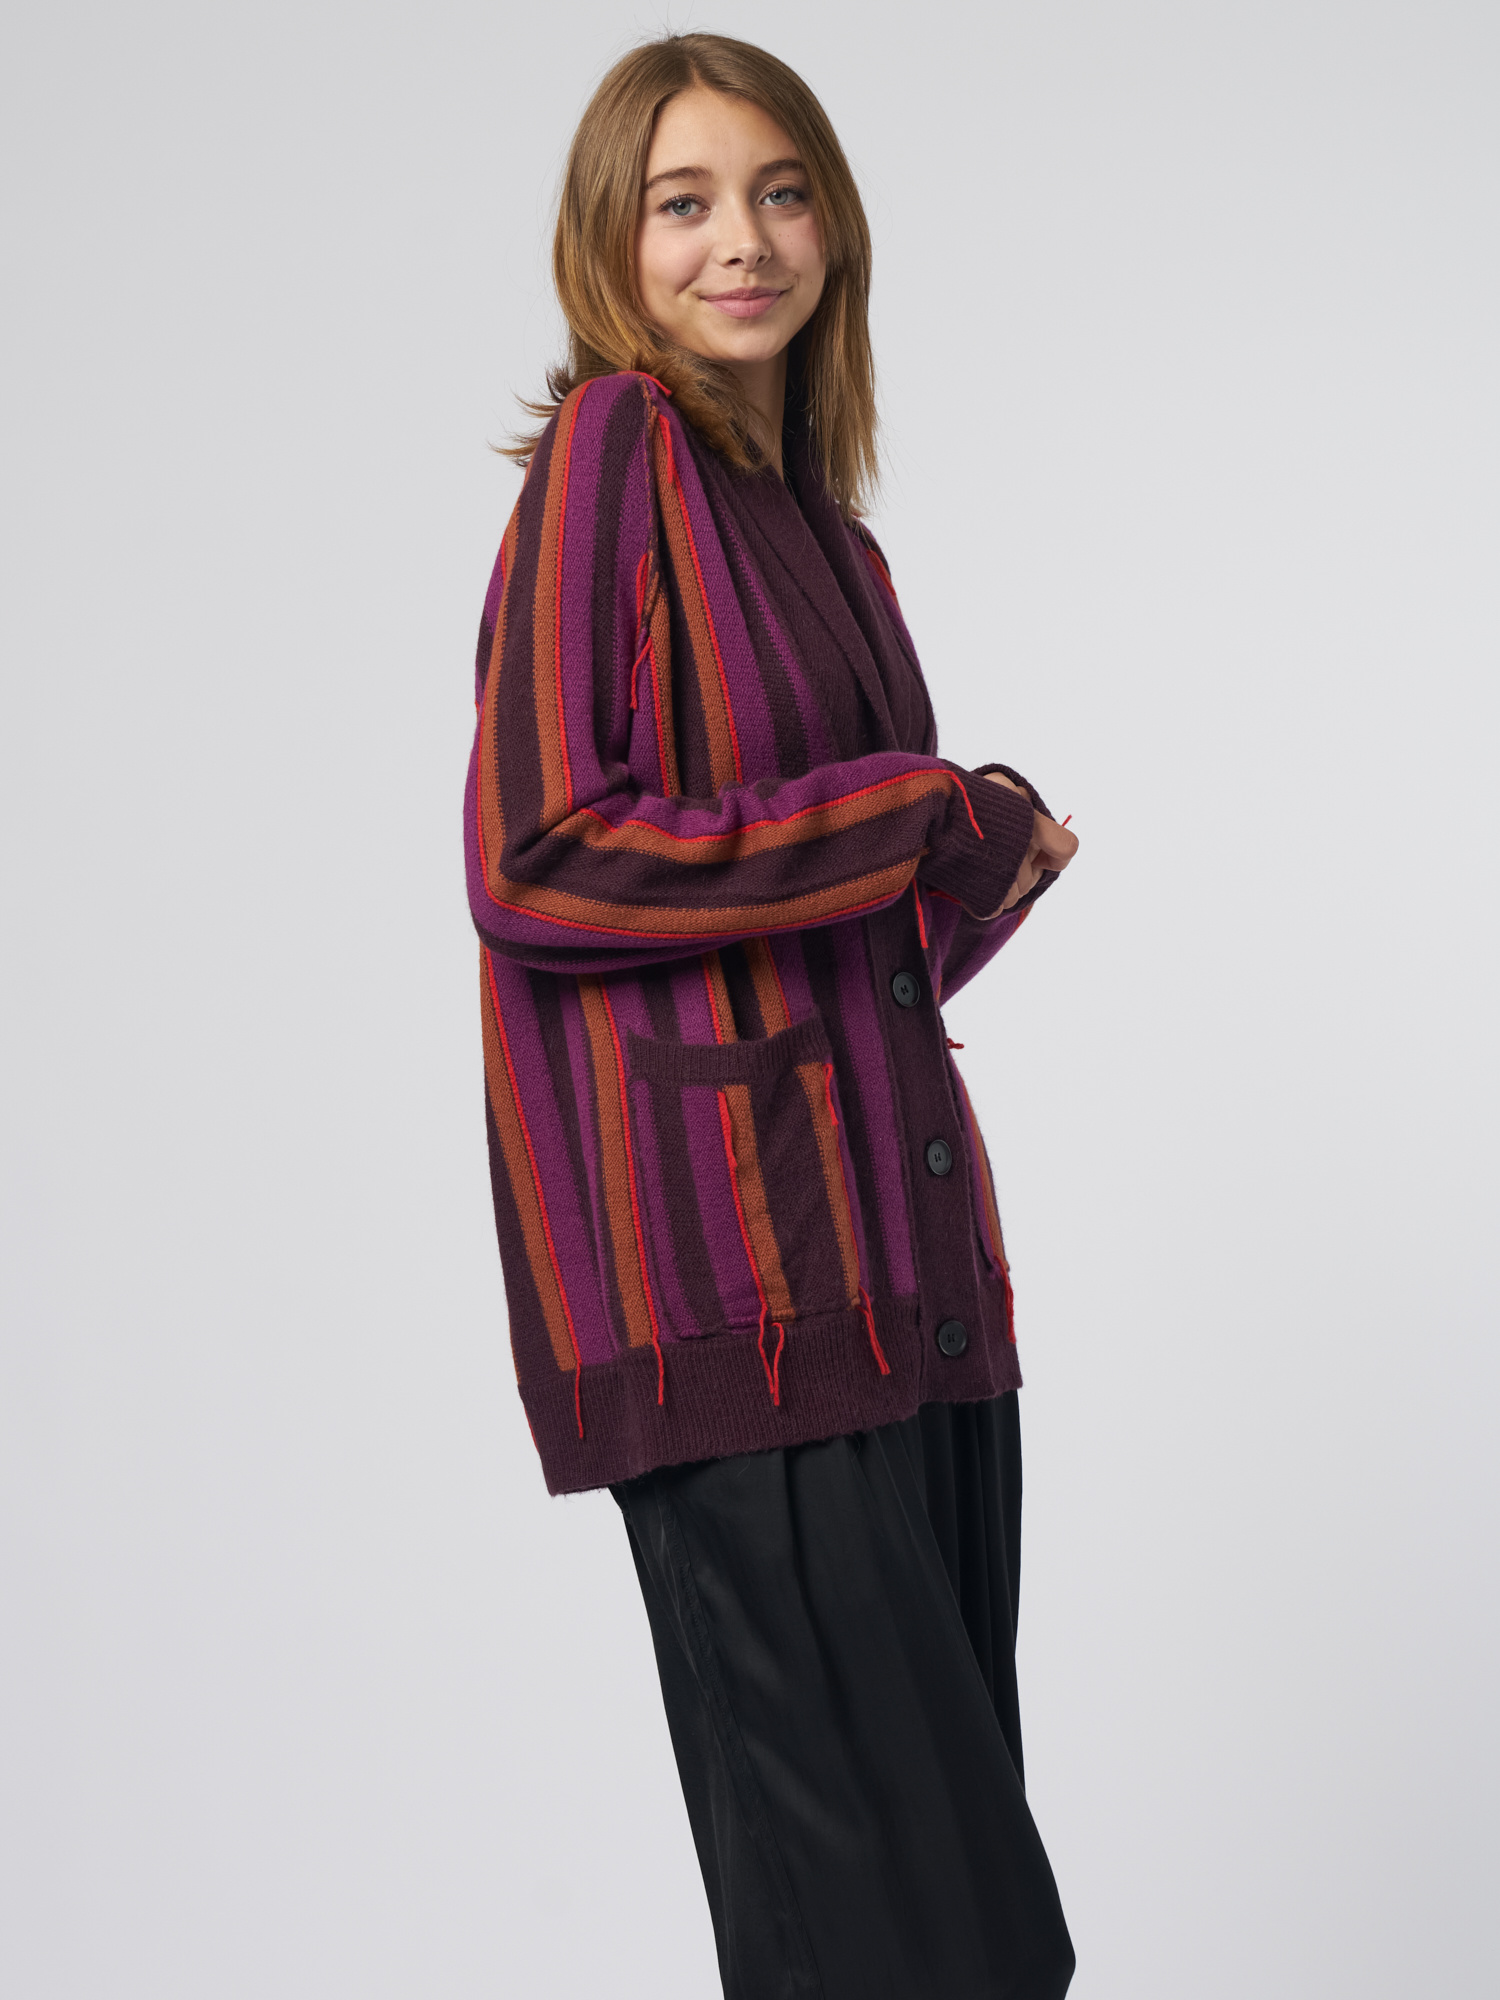 ALSLIAO Womens Winter Warm Cardigan Coat Long Sleeve Outwear Jacket Fashion  Knit Sweater Red M 